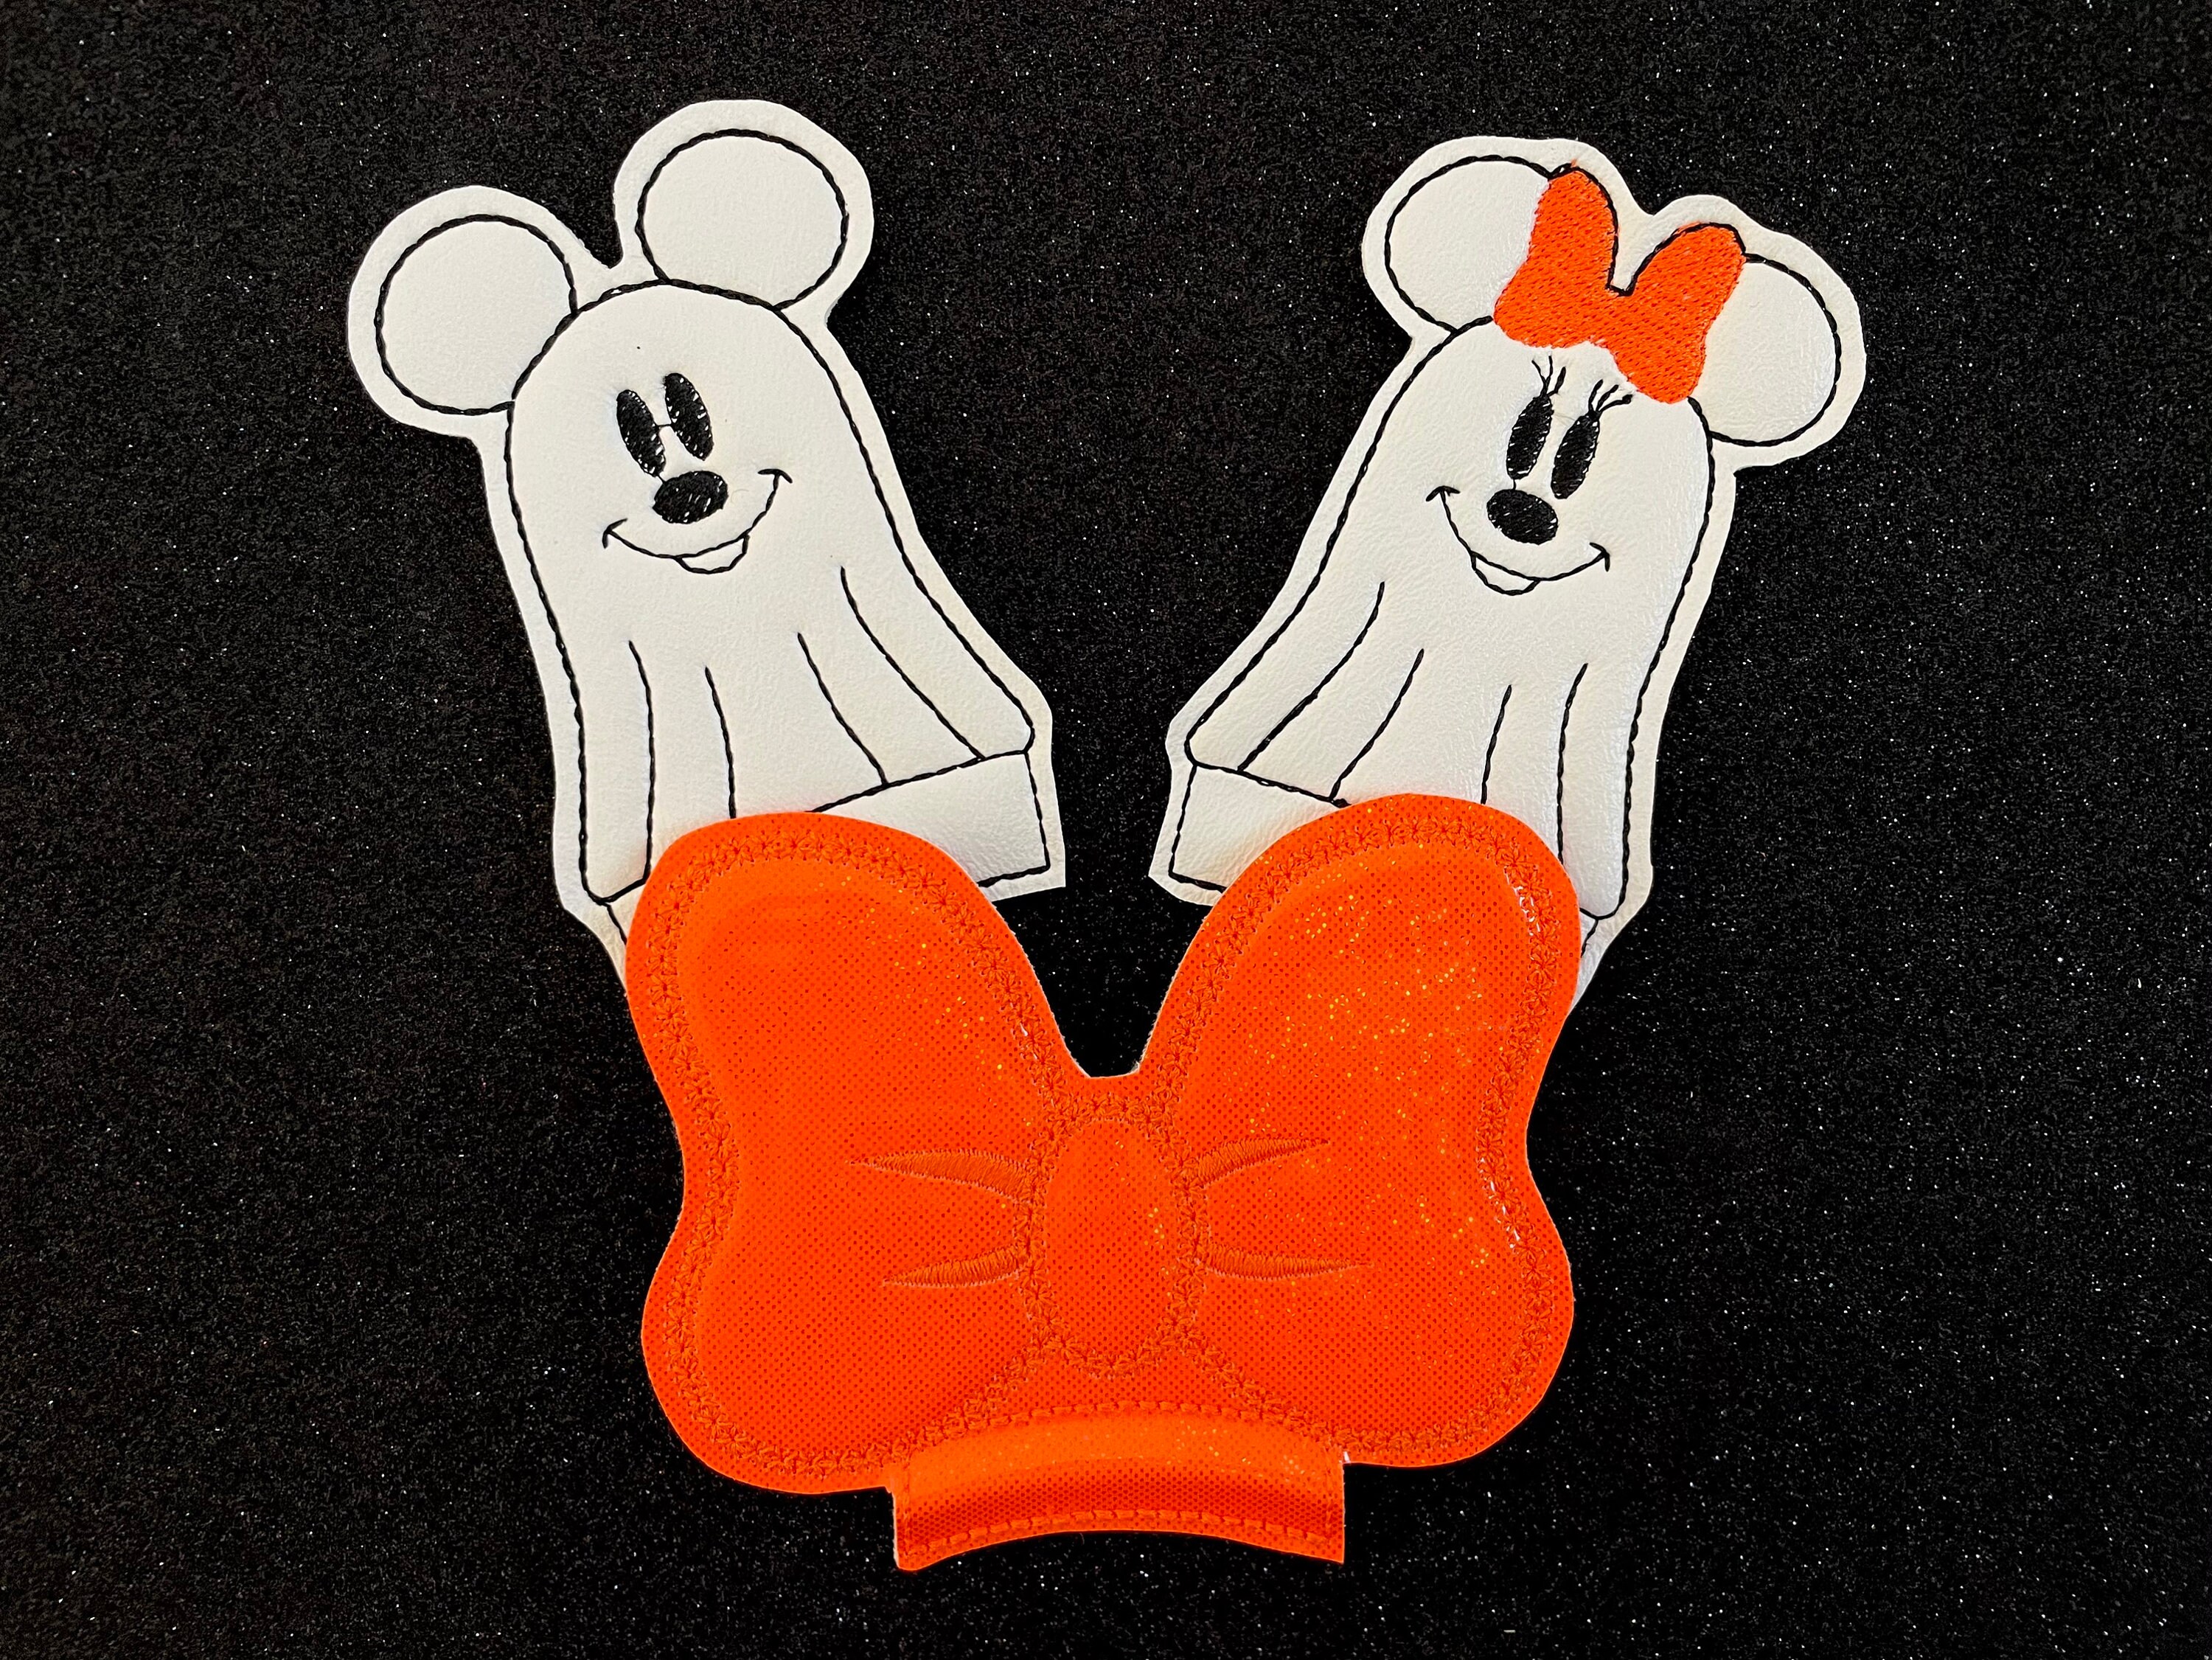 Spooky mouse couple ears interchangeable ears mouse ears park ears